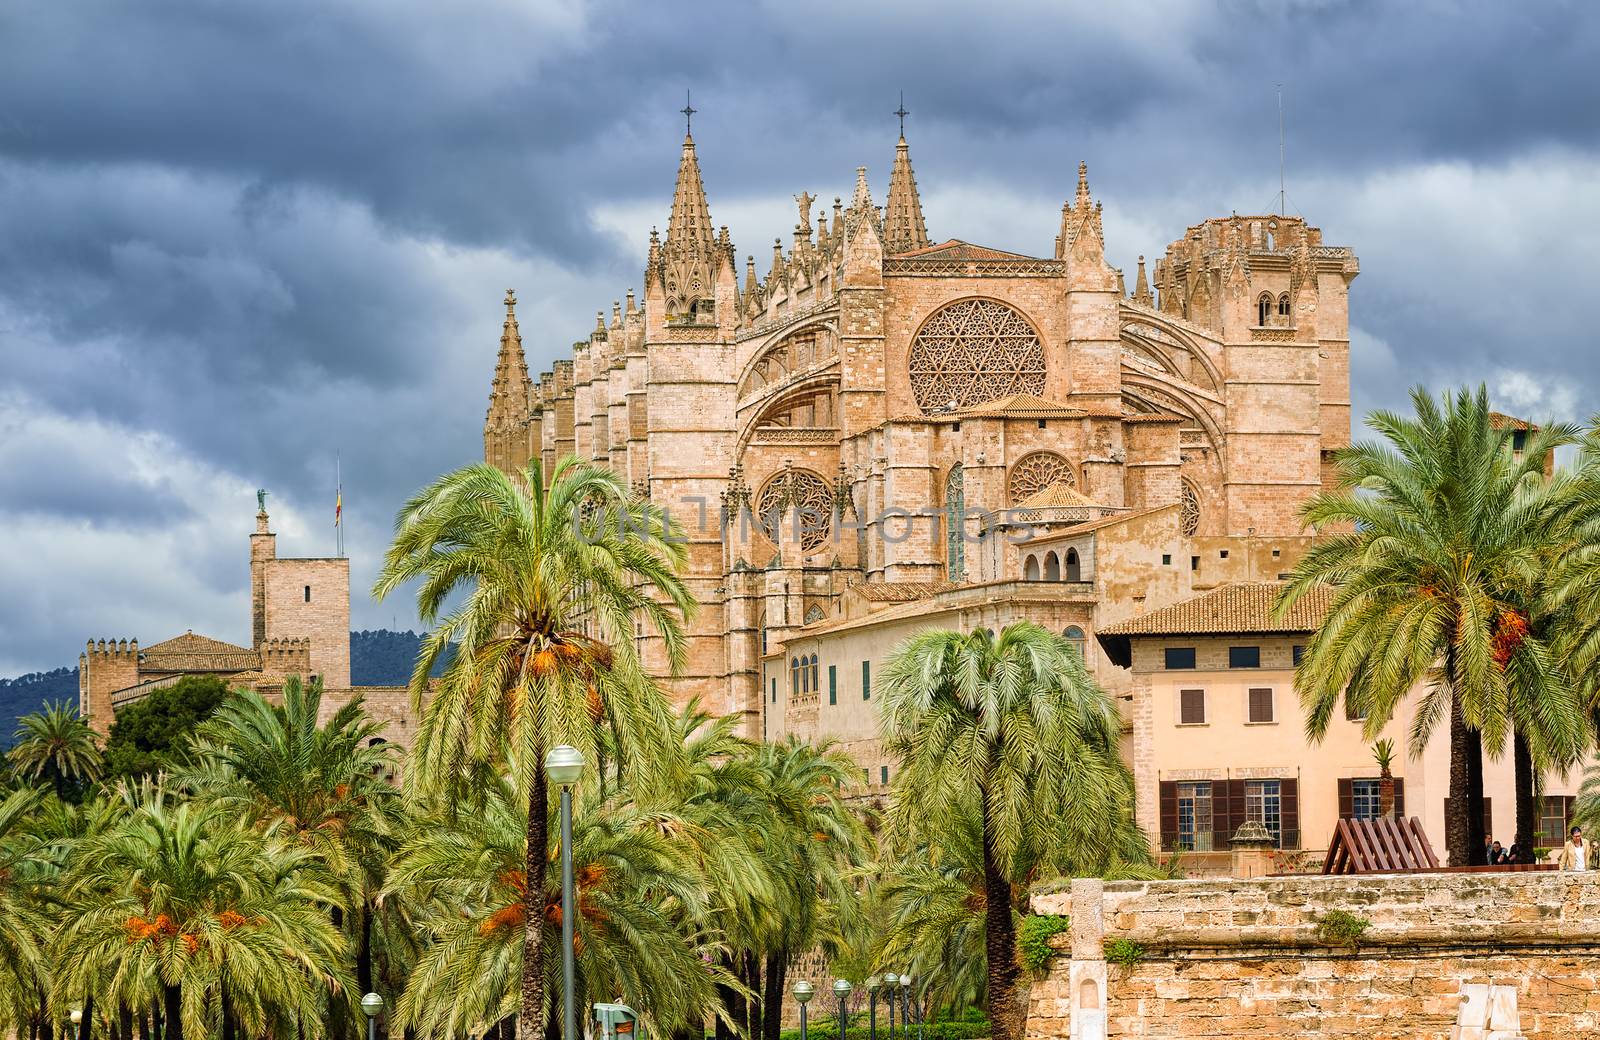 La Seu, medieval gothic cathedral of Palma de Mallorca, in the palm tree garden, Spain